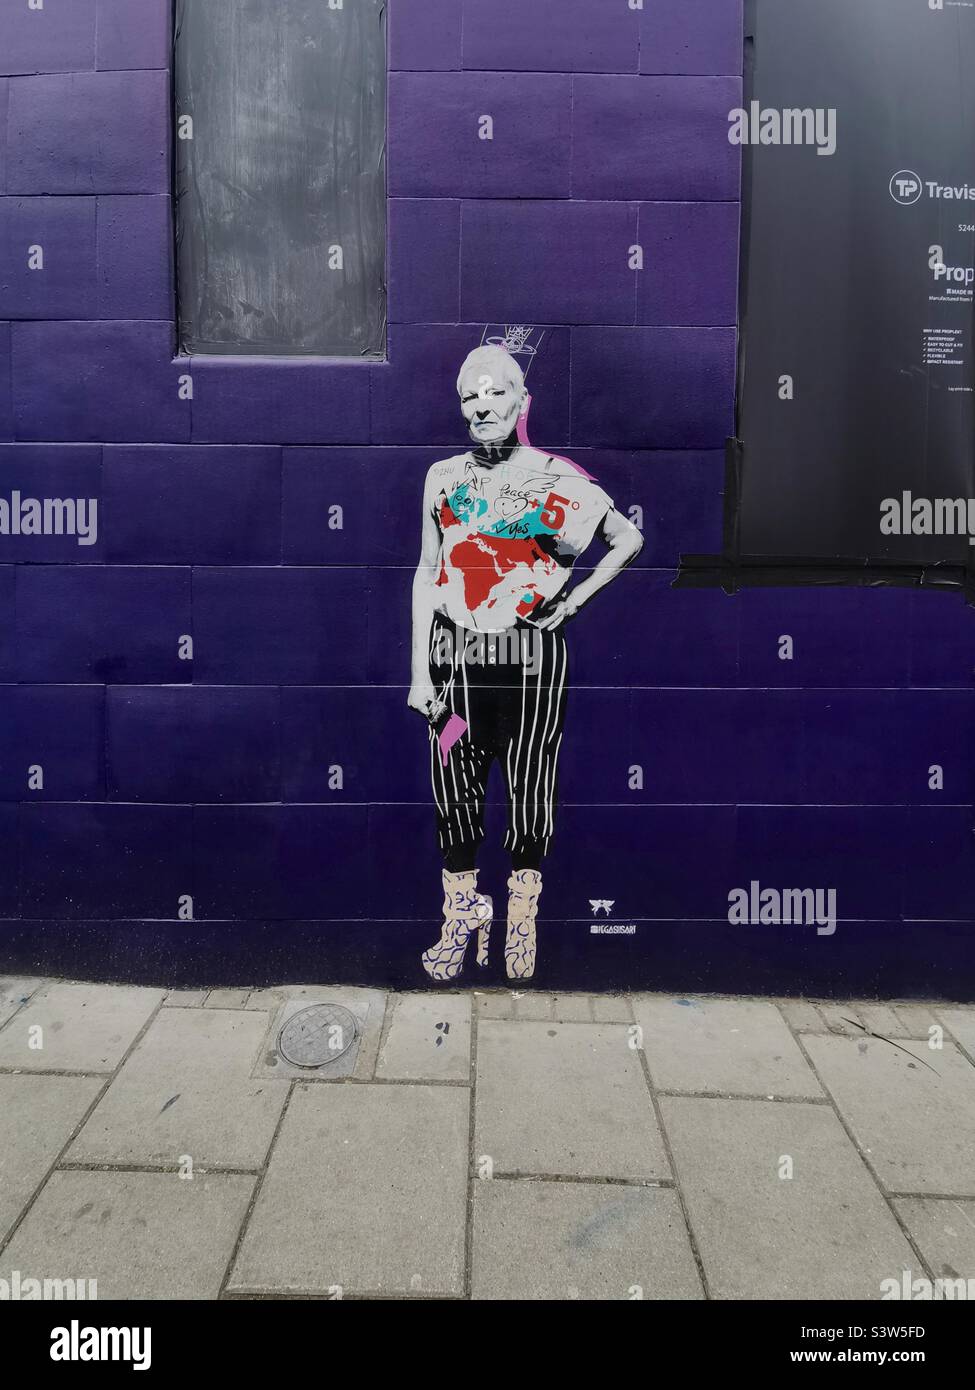 vivienne westwood graffiti in London on purple brick wall Stock Photo